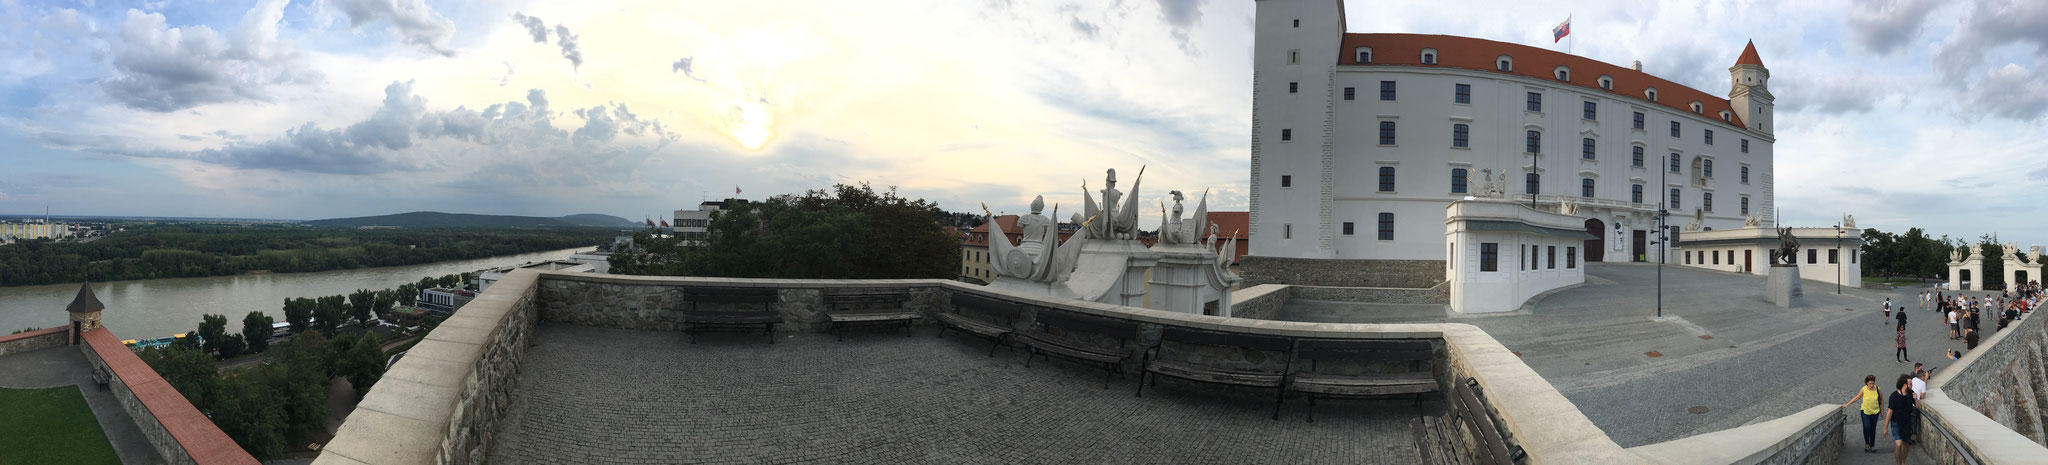 Bratislava castle IV